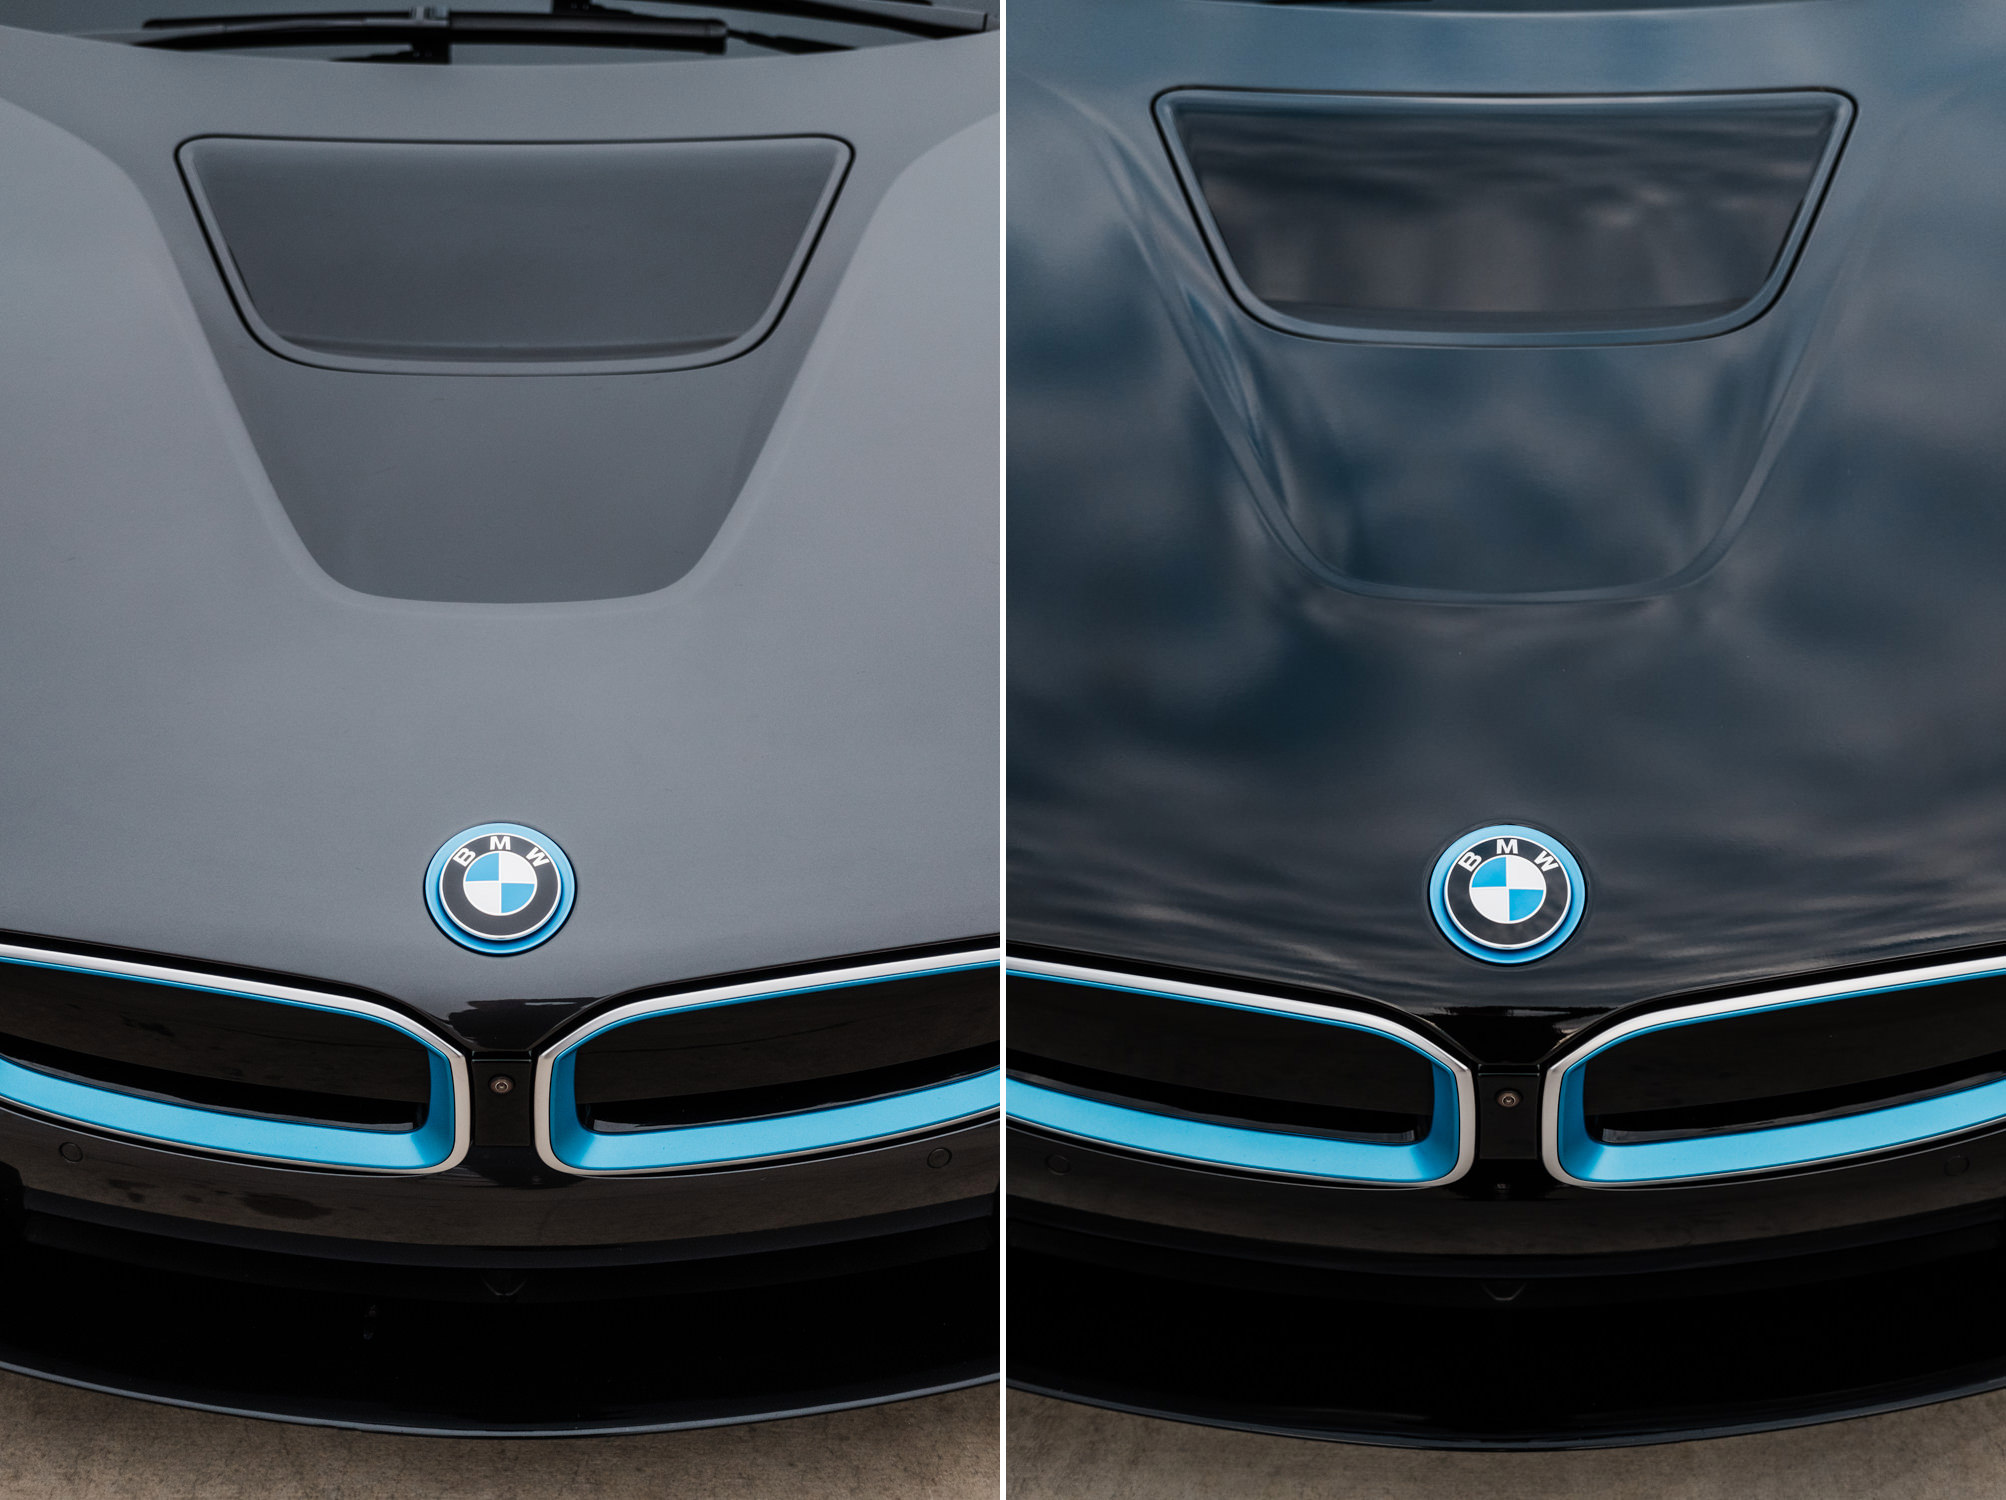 BMW i8-Vinyl Wrap-Vinyl Wrapping-Color Change Wrap-Vinyl Exterior-Ceramic Pro-Ceramic Pro Coating-Ceramic Coating-BMW-104.jpg